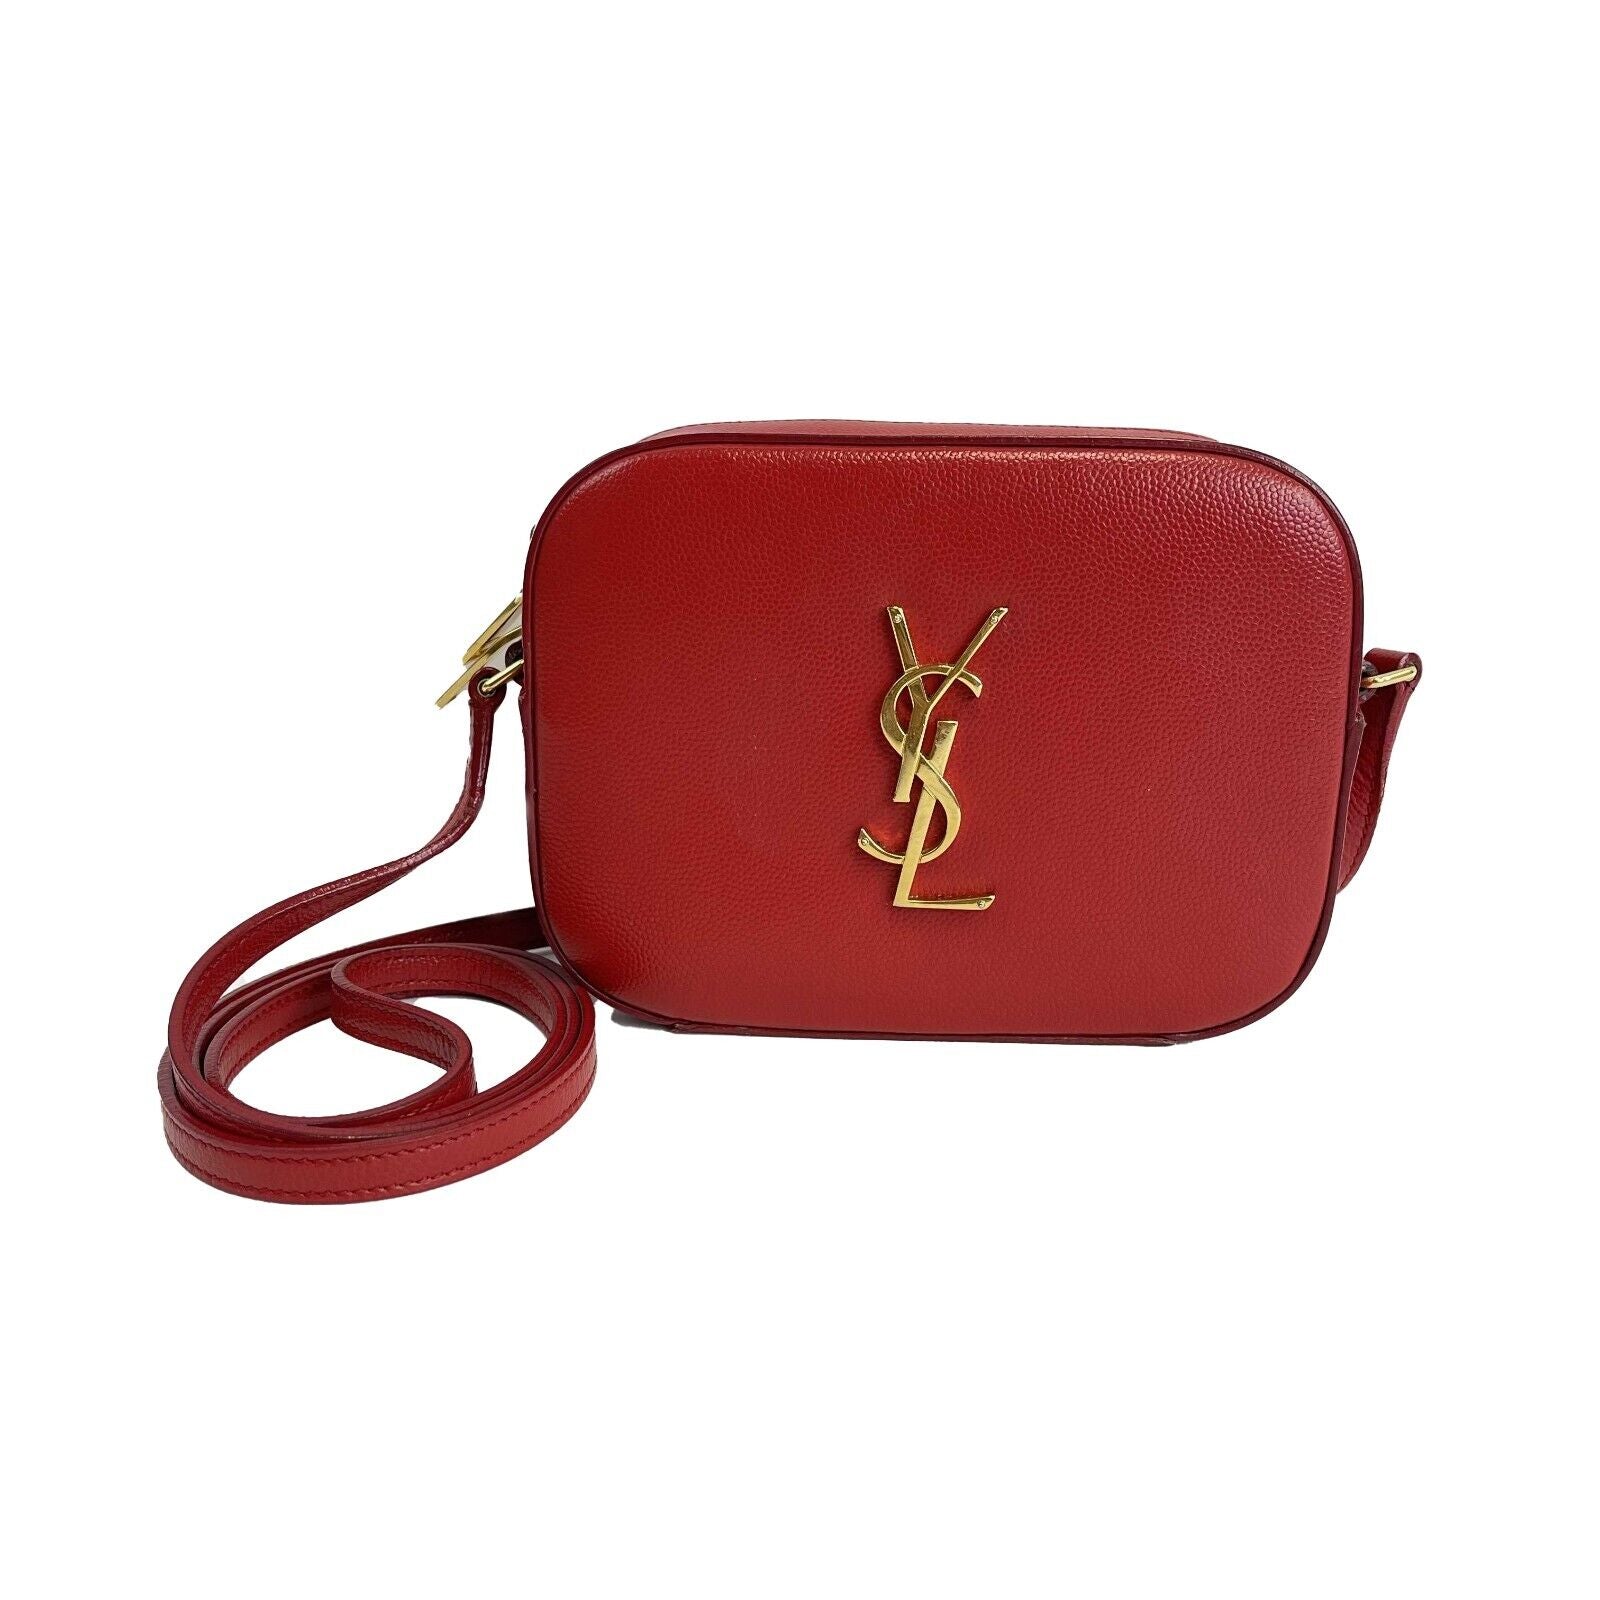 First Luxury Bag: LV Alma BB or YSL Lou Camera Bag? : r/handbags